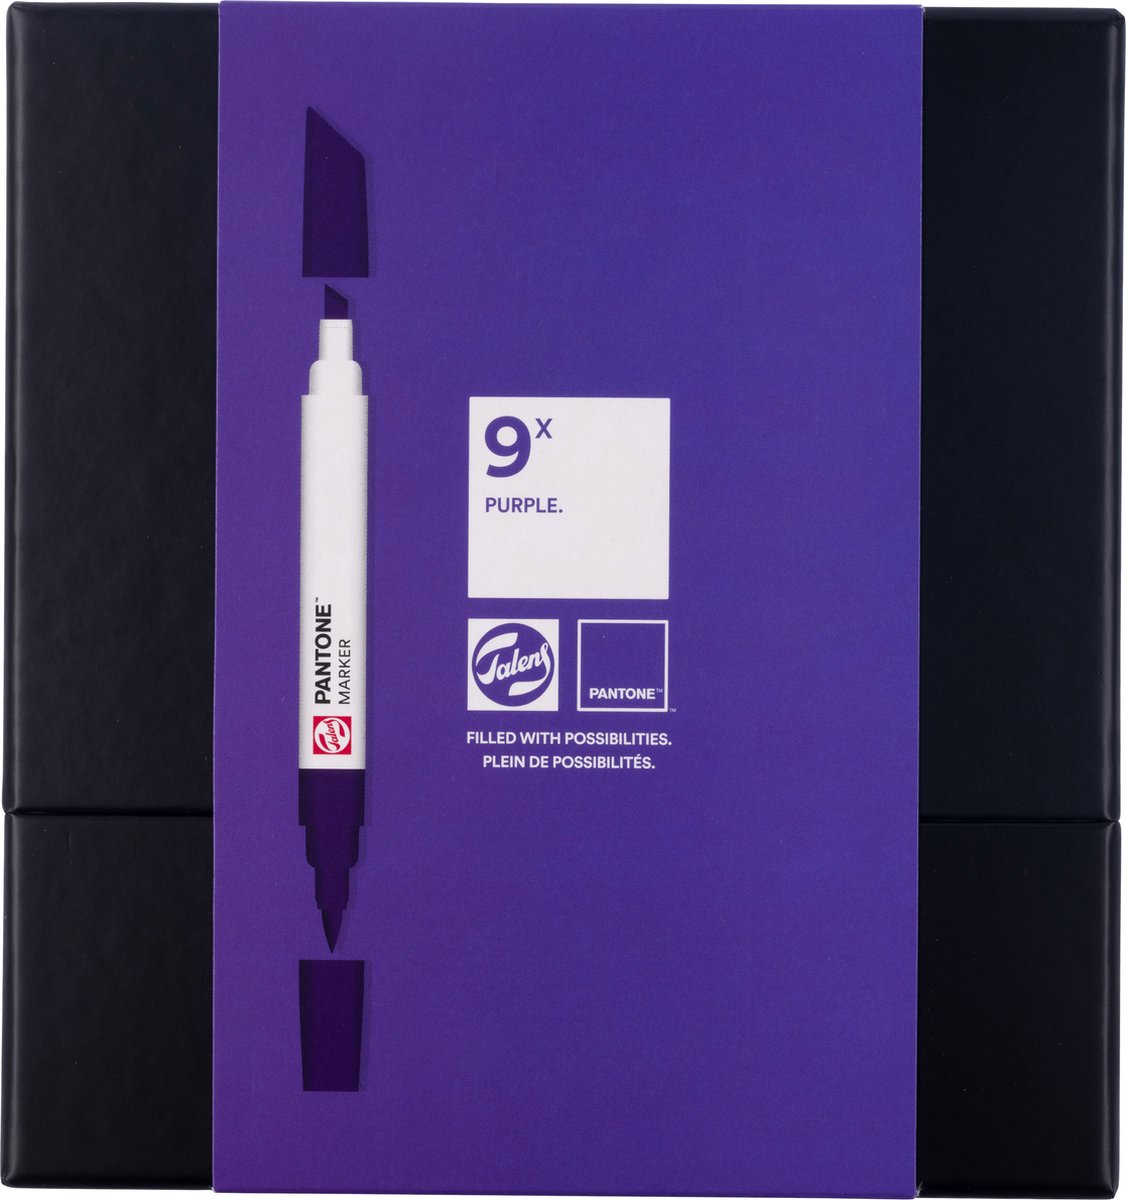 Talens | Pantone marker set 9x Purple